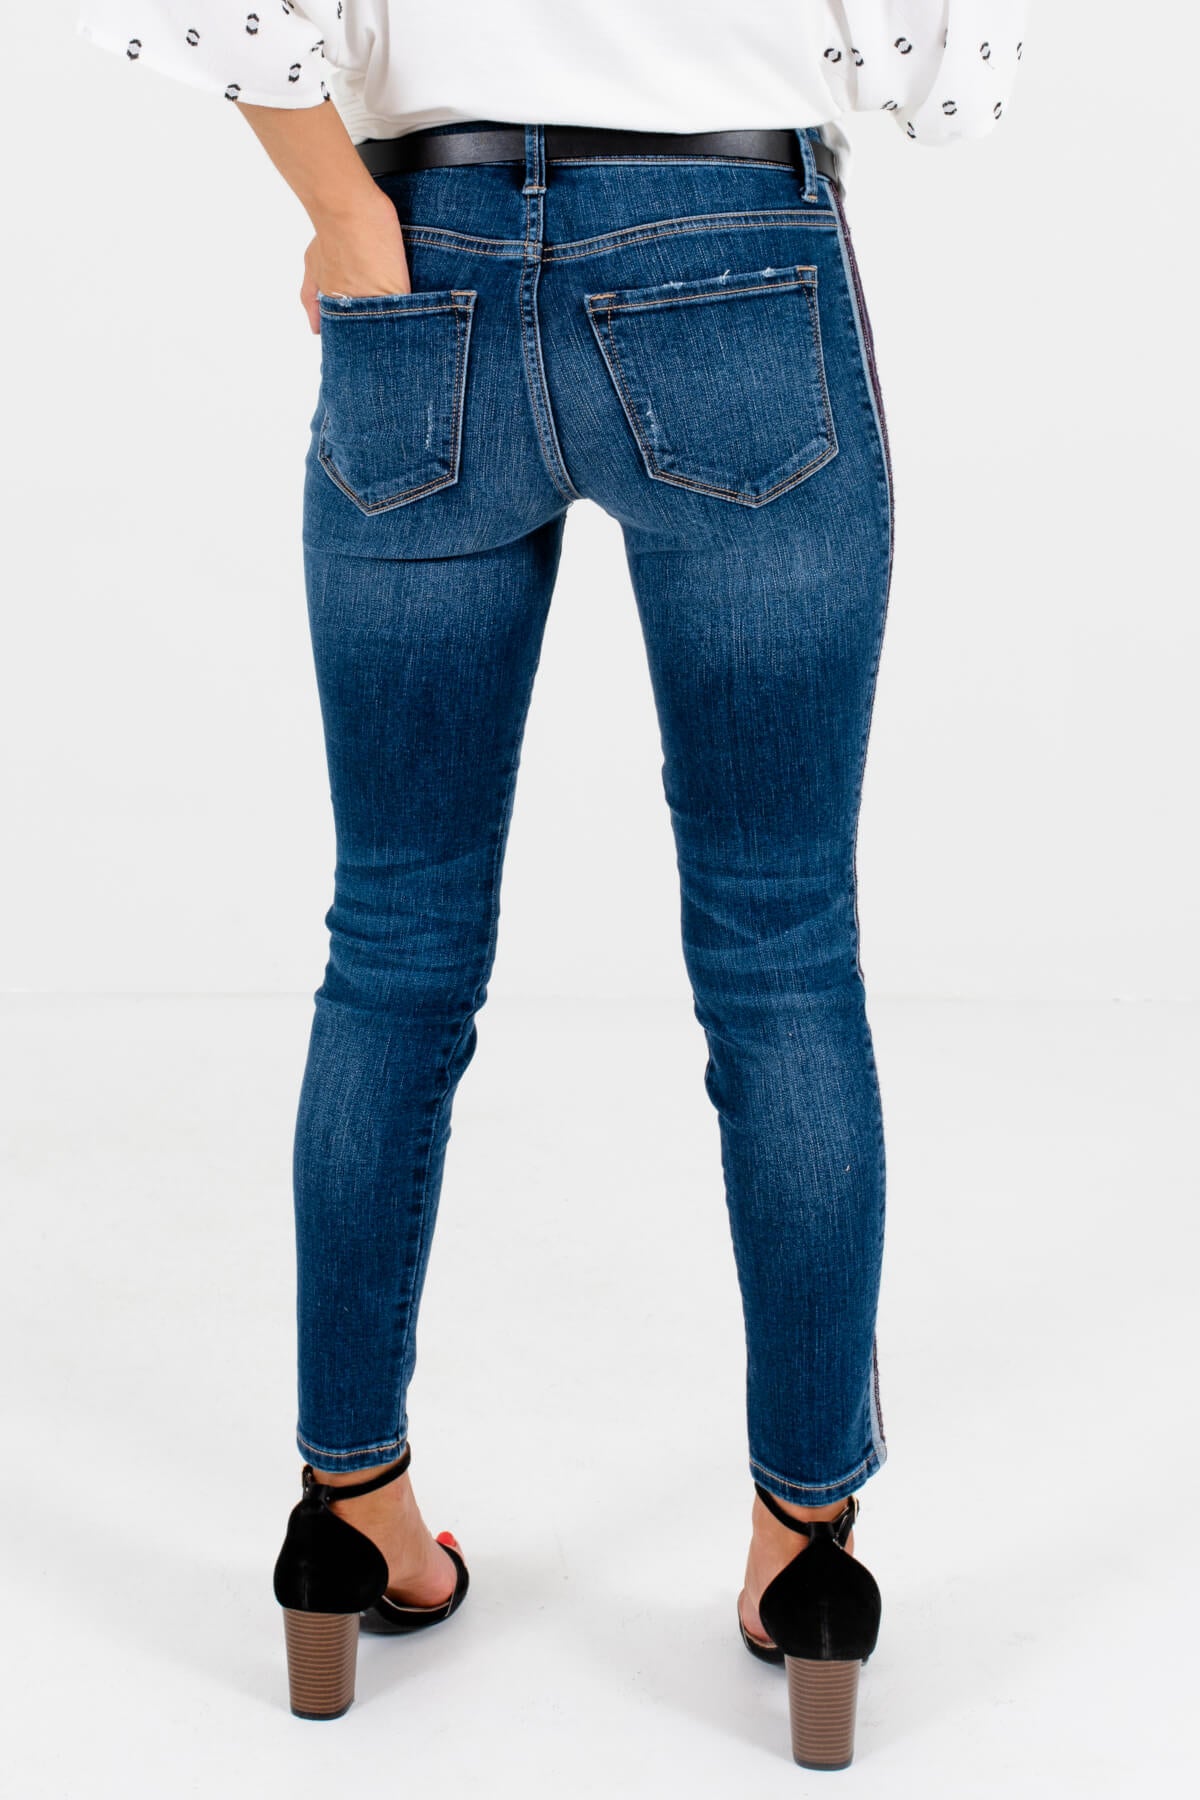 Women's Dark Wash Denim Blue Contrasting Striped Sides Boutique Jeans